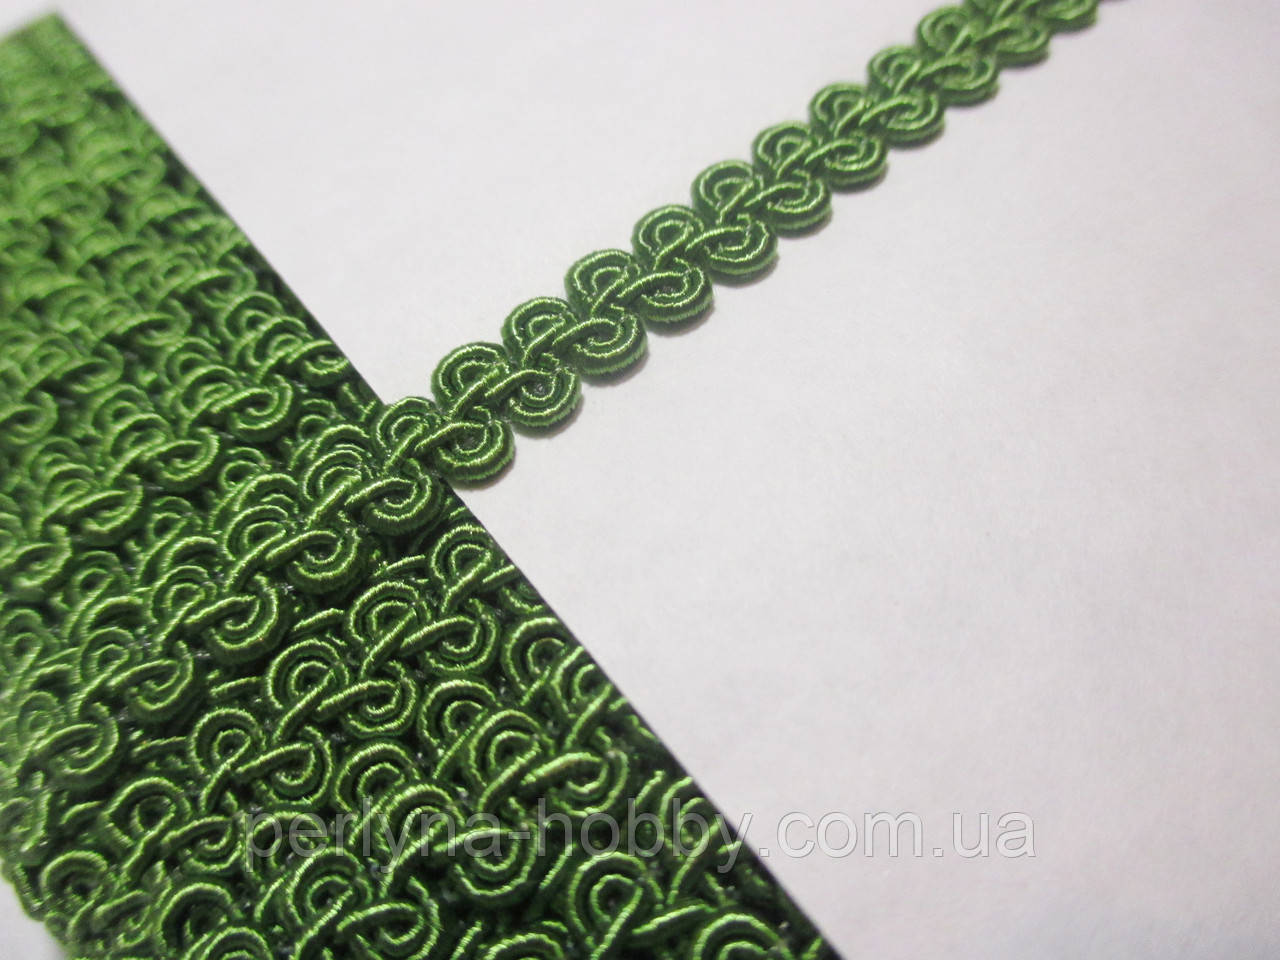 Тесьма декоративная Тасьма  декоративна шанель вузька 6мм, зелена, горохова